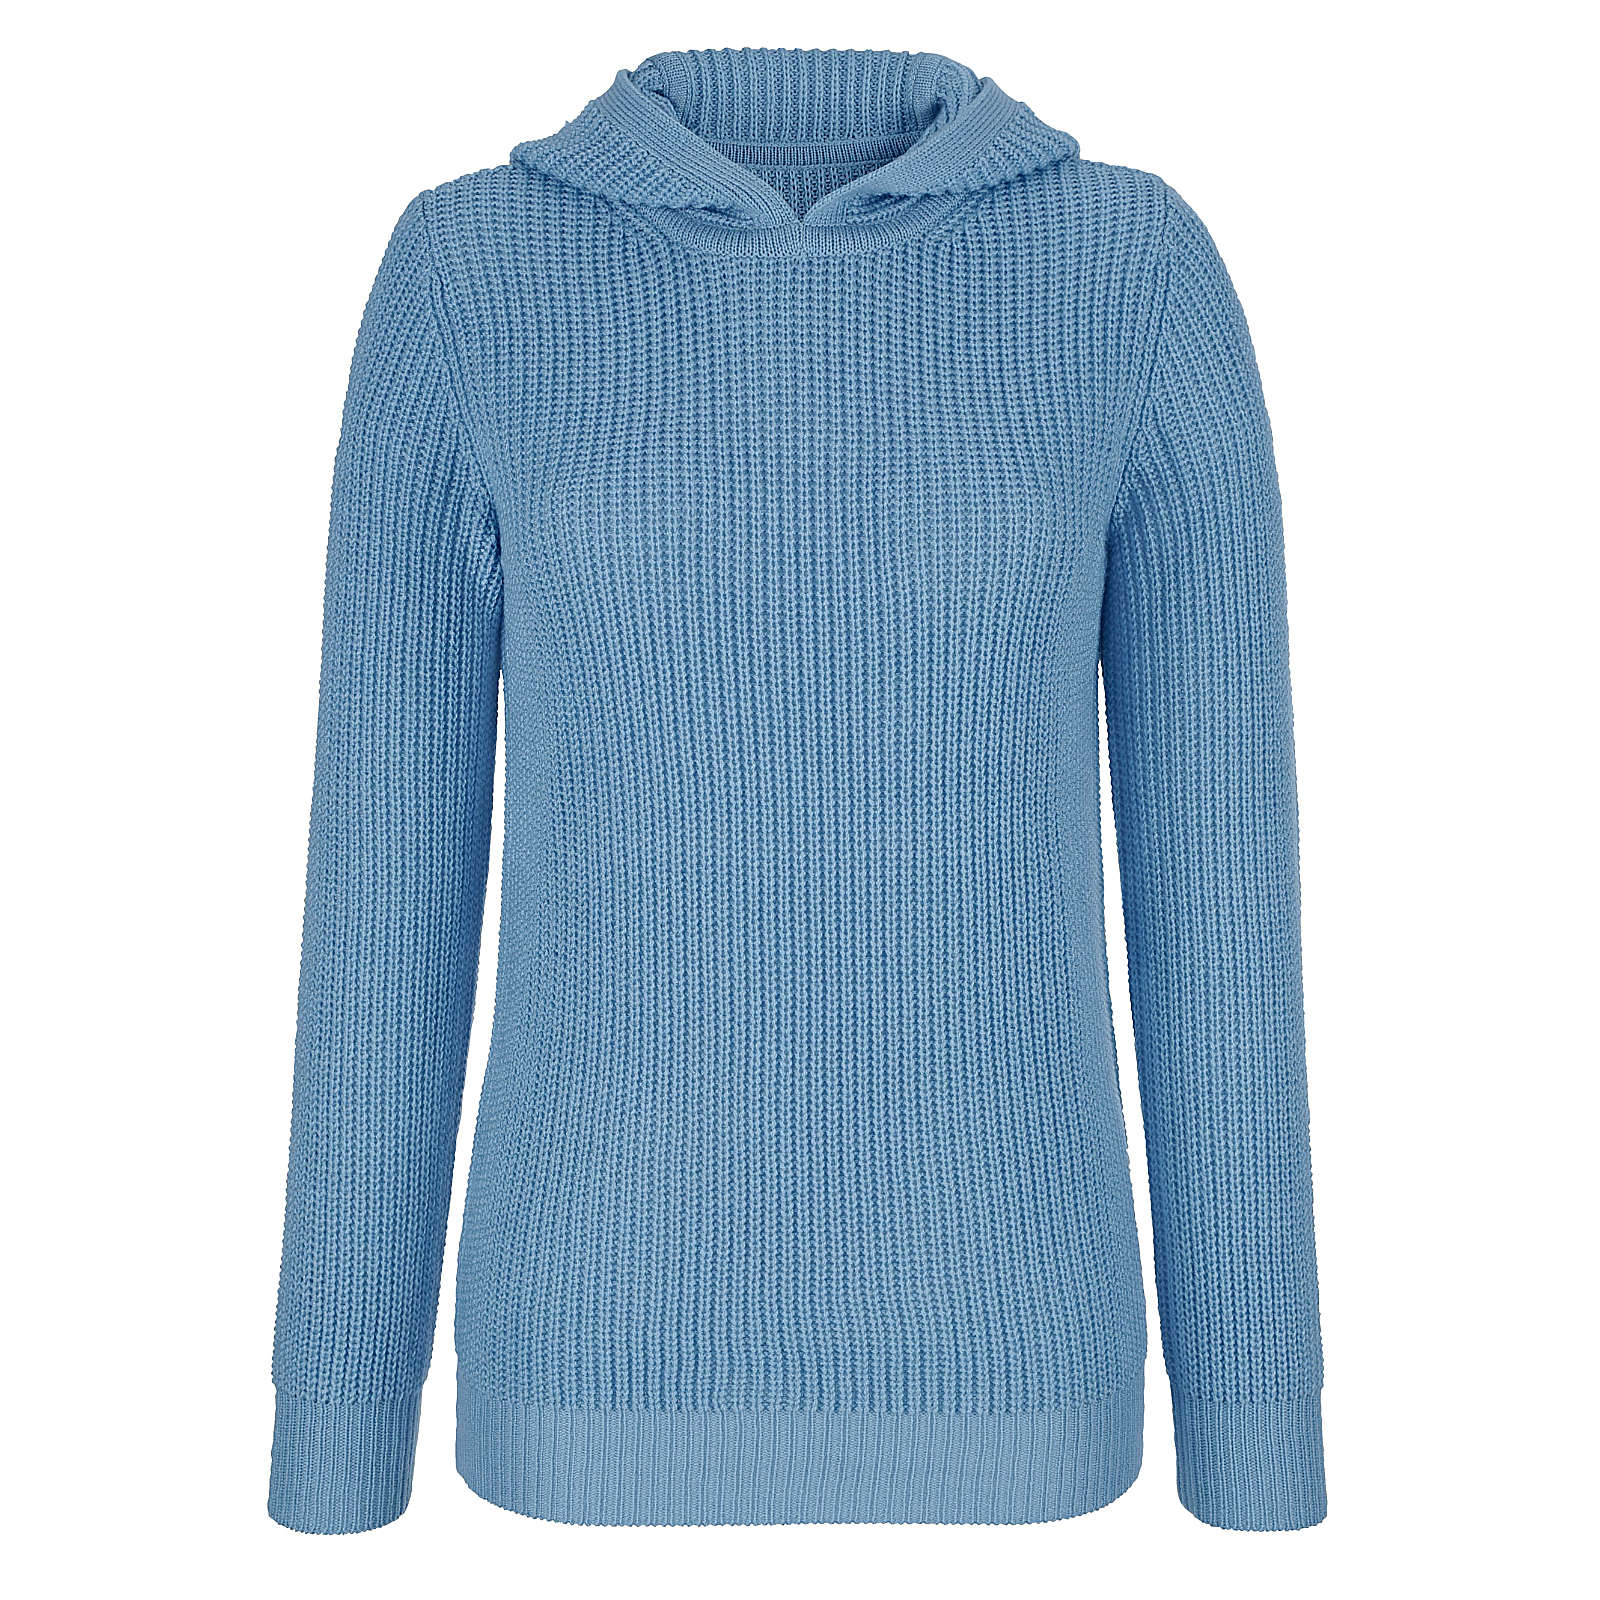 Image of BASICALLY YOU Pullover langarm uni Gerade blickdicht Kunstfaser Pullover blau Damen Gr. 44